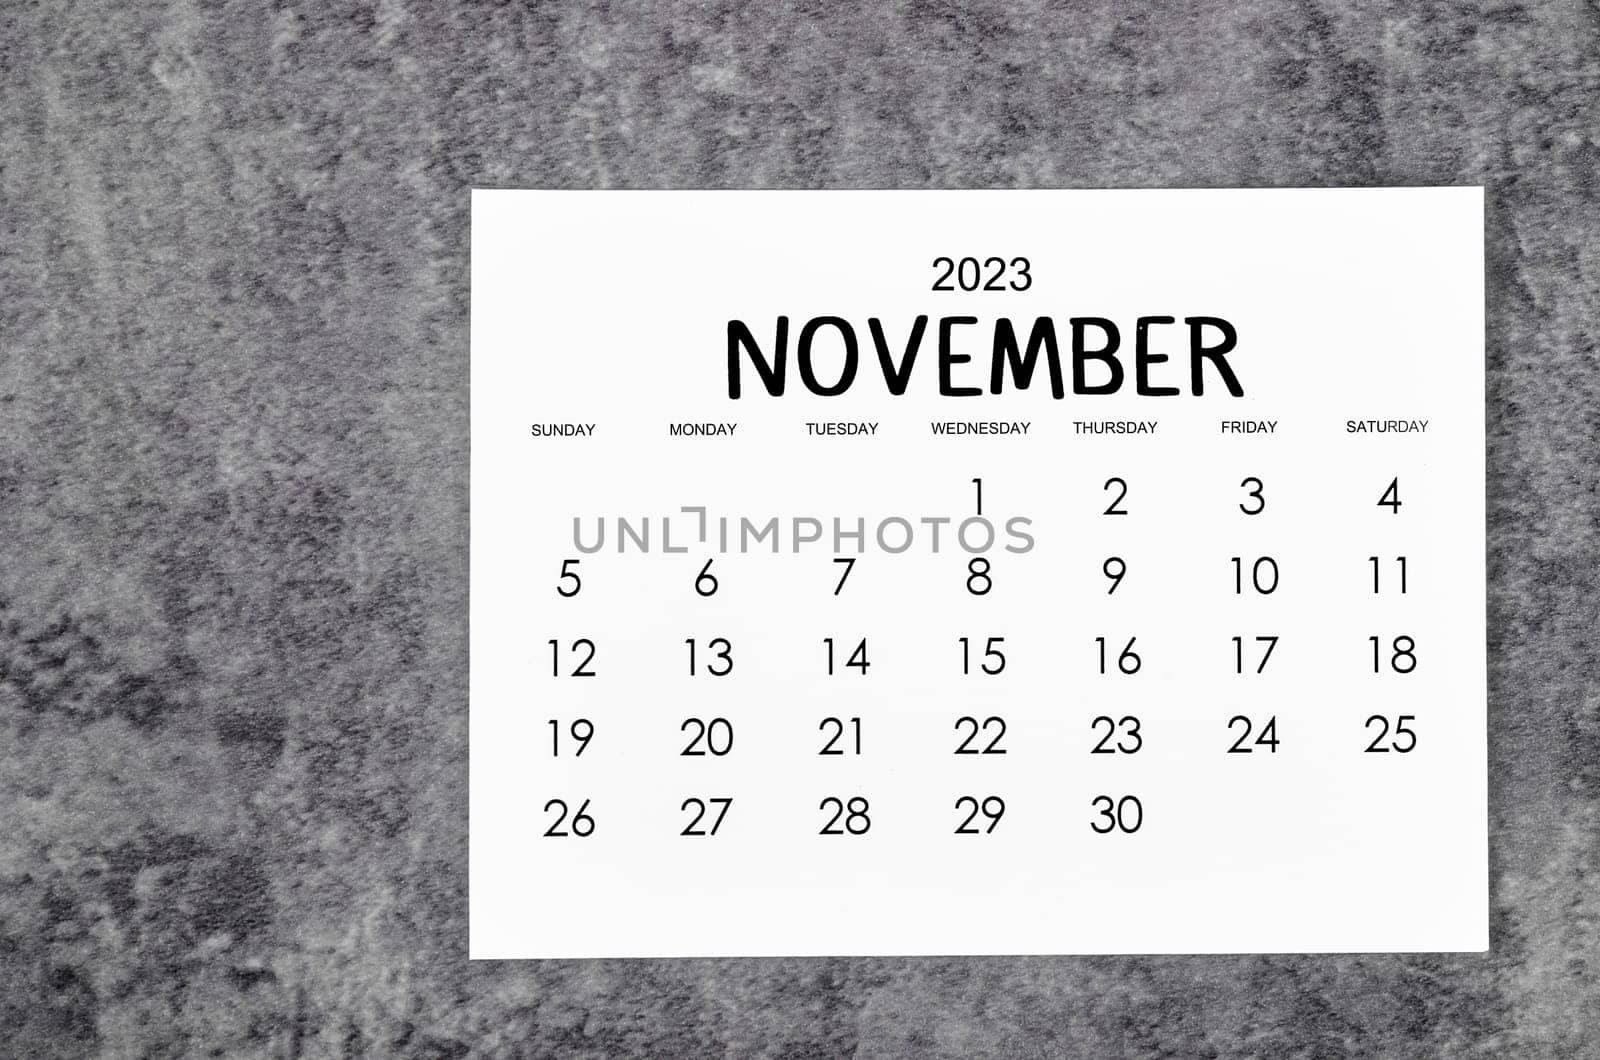 November 2023 Monthly calendar for 2023 year on grunge background.